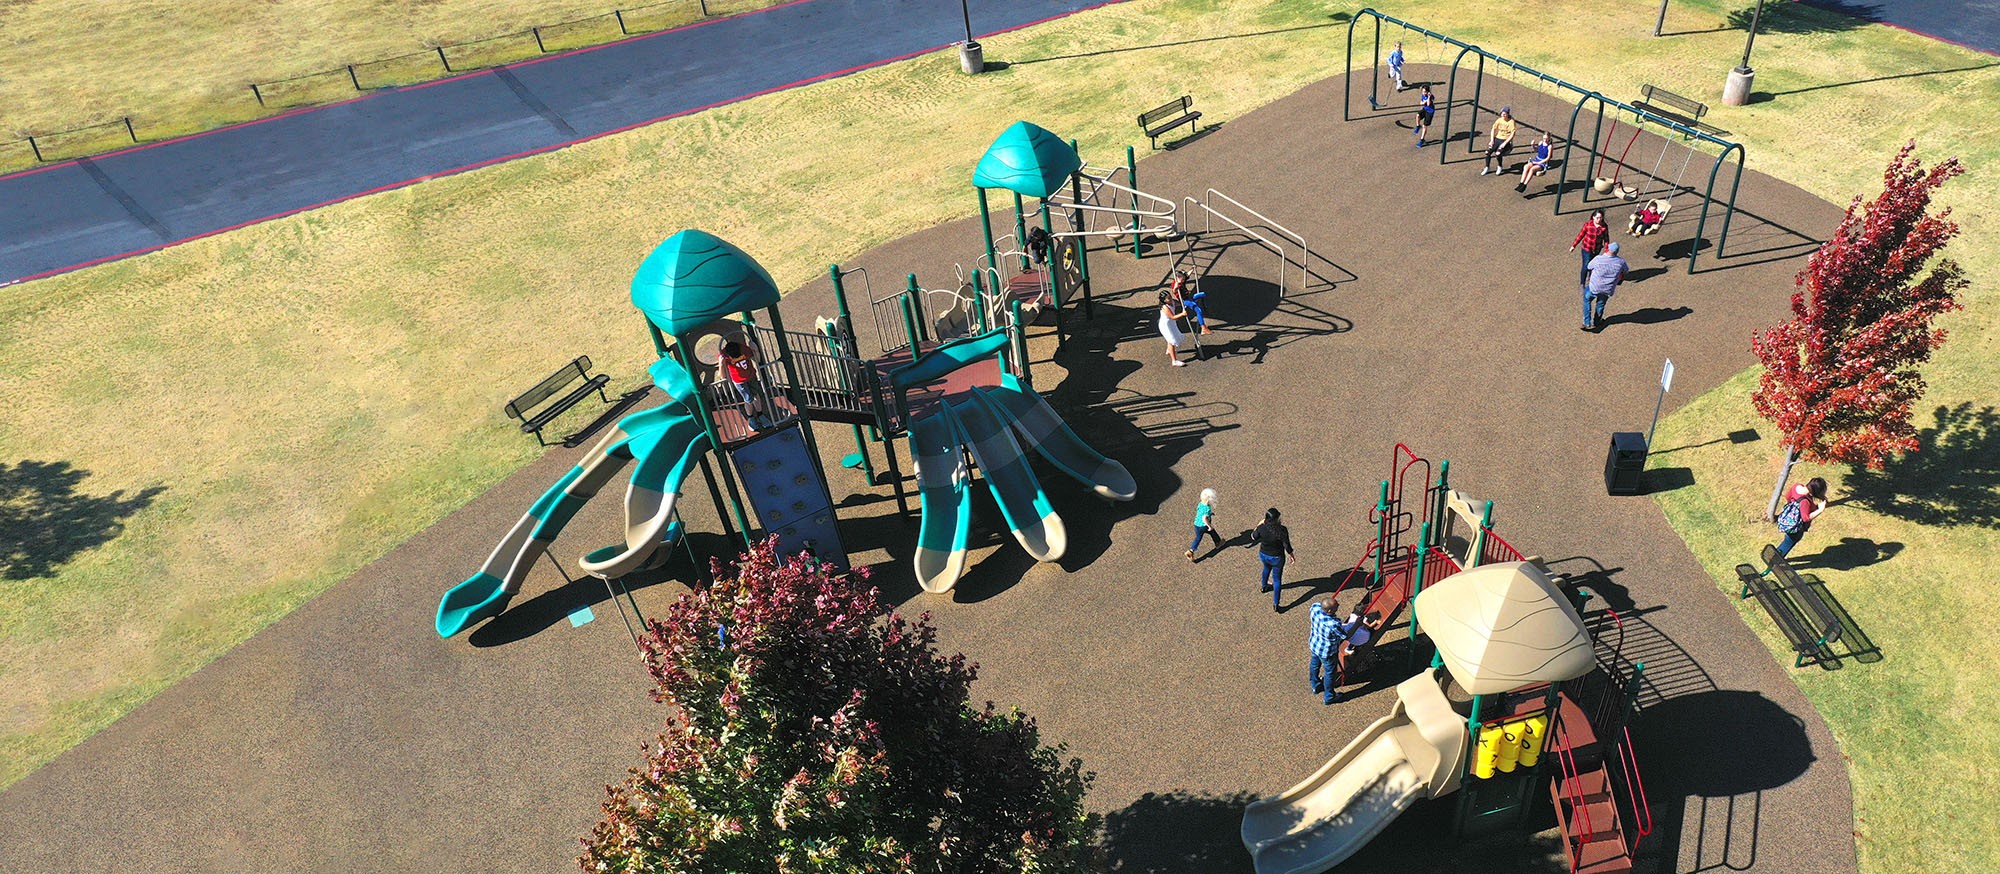 st-monica-overhead-view-playground